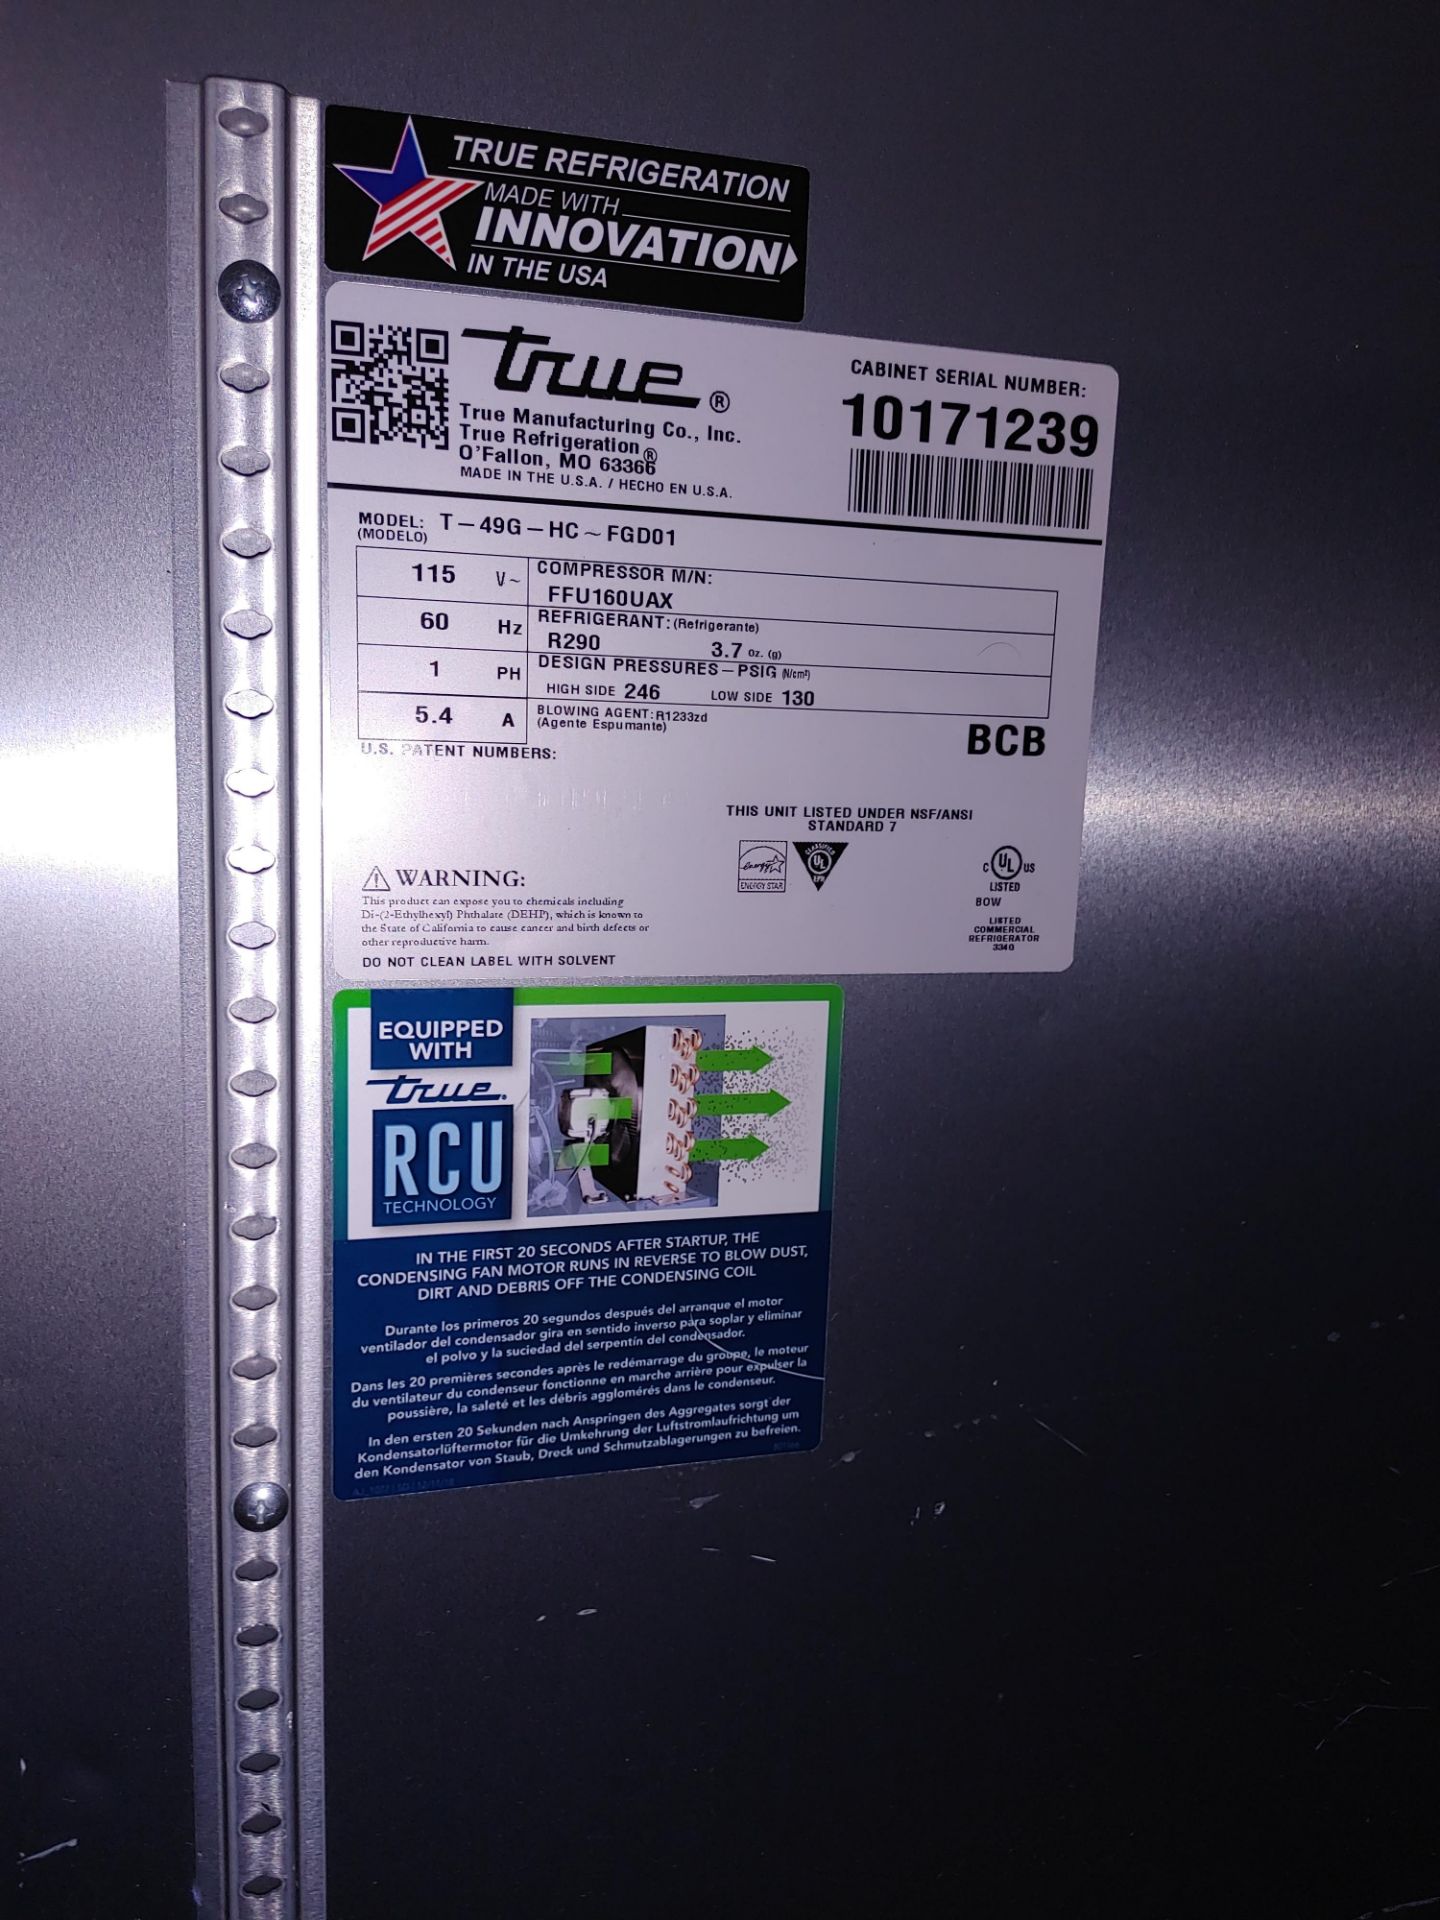 True "T-49G-HC-FGD01" 2 Door Glass Front Refrigerator S/N 10171239 - Image 2 of 2